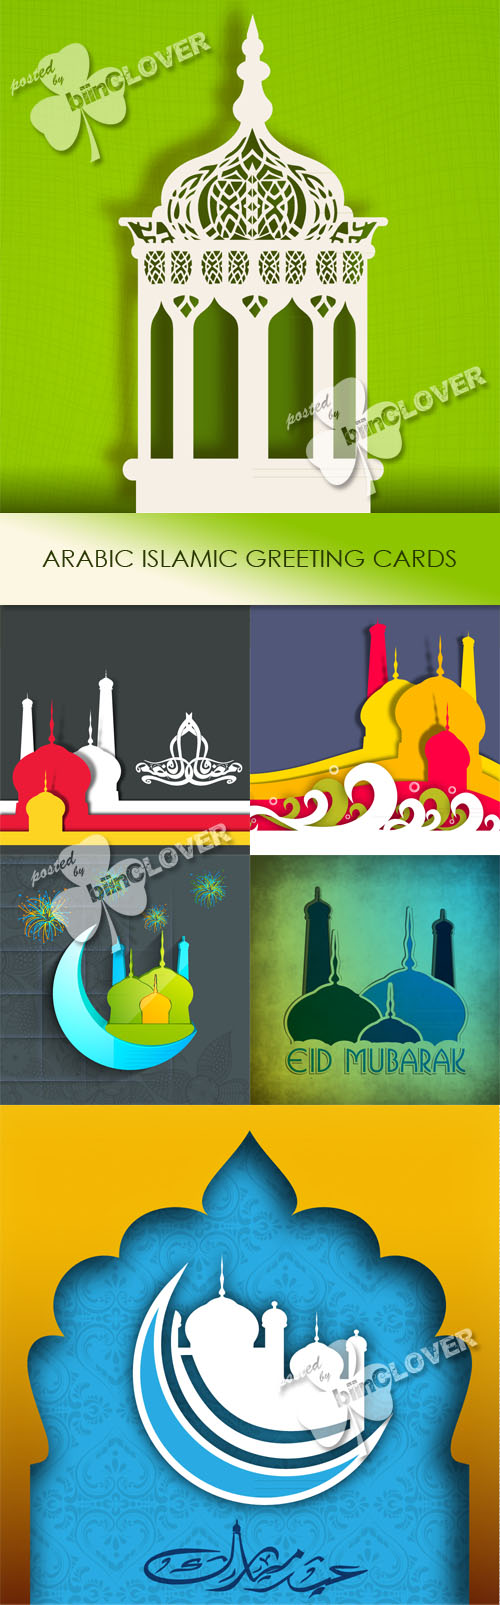 Arabic Islamic greeting cards 0454